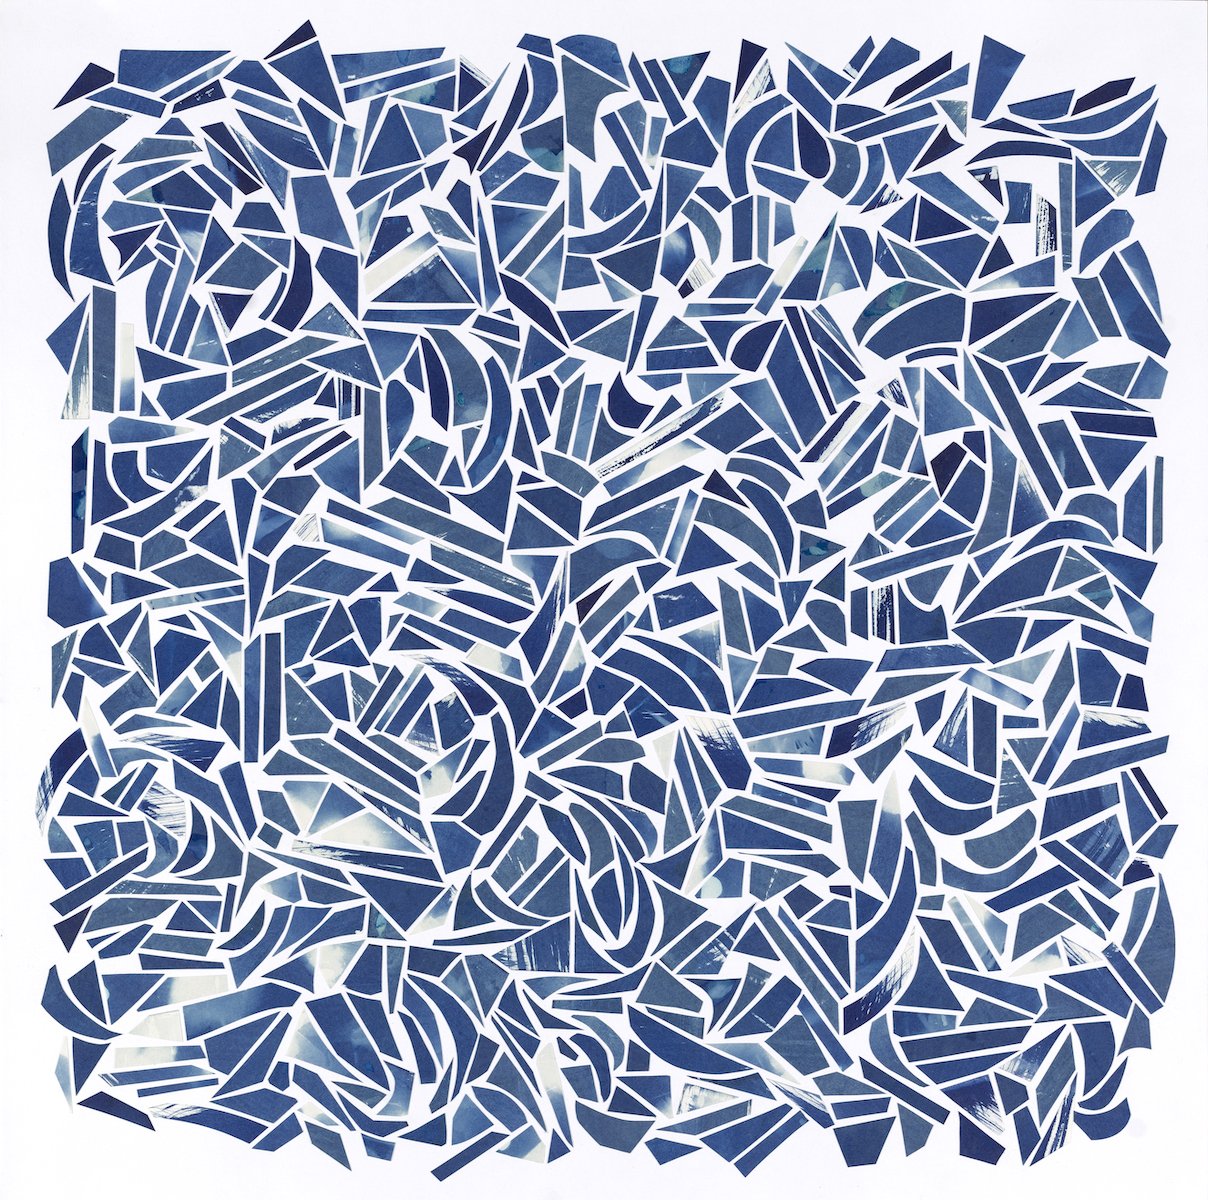 Beyond the Sea, 23, cyanotype print paper mosaic 